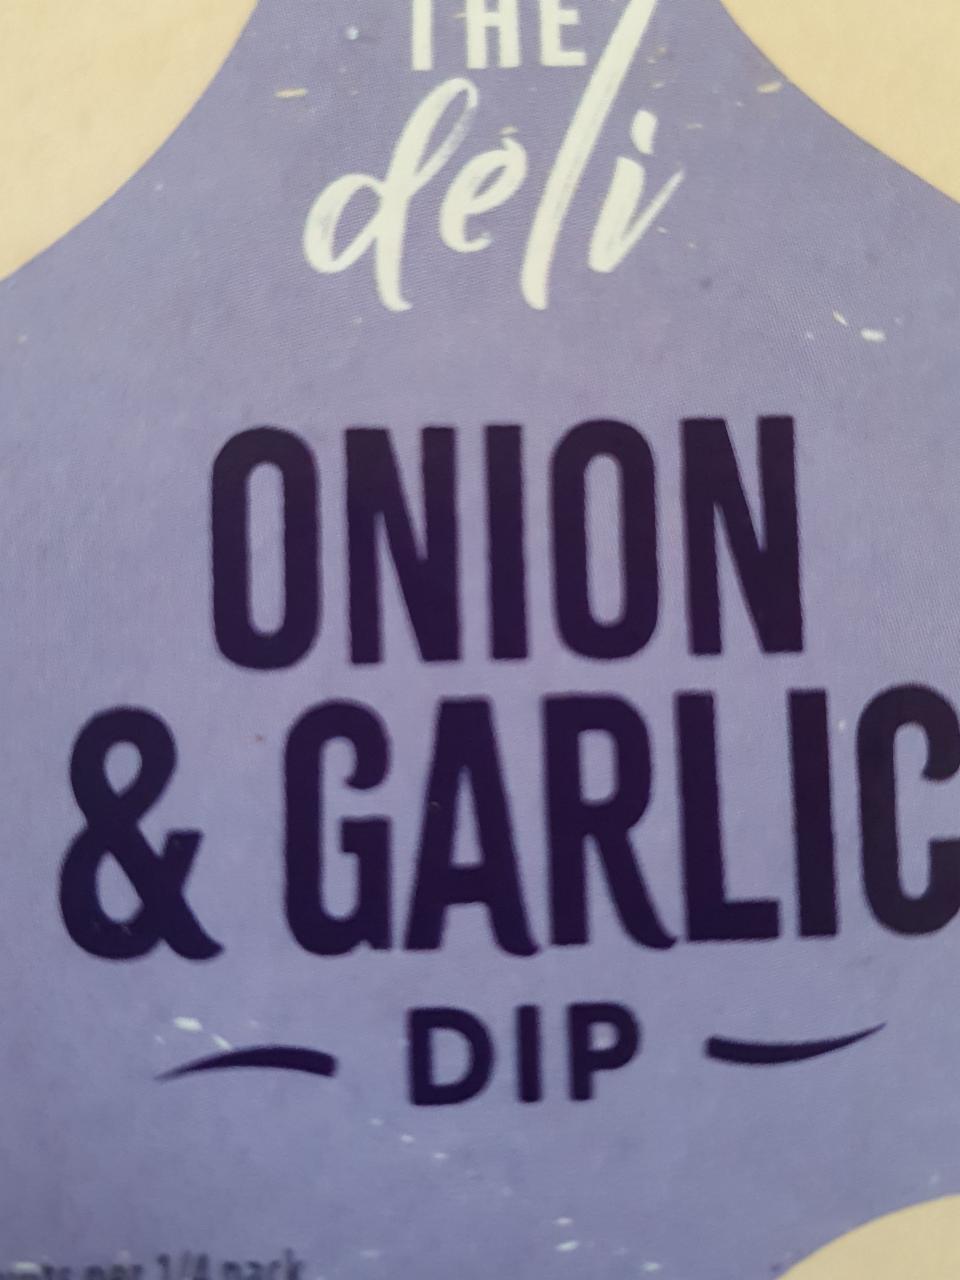 Fotografie - onion & garlic dip deli